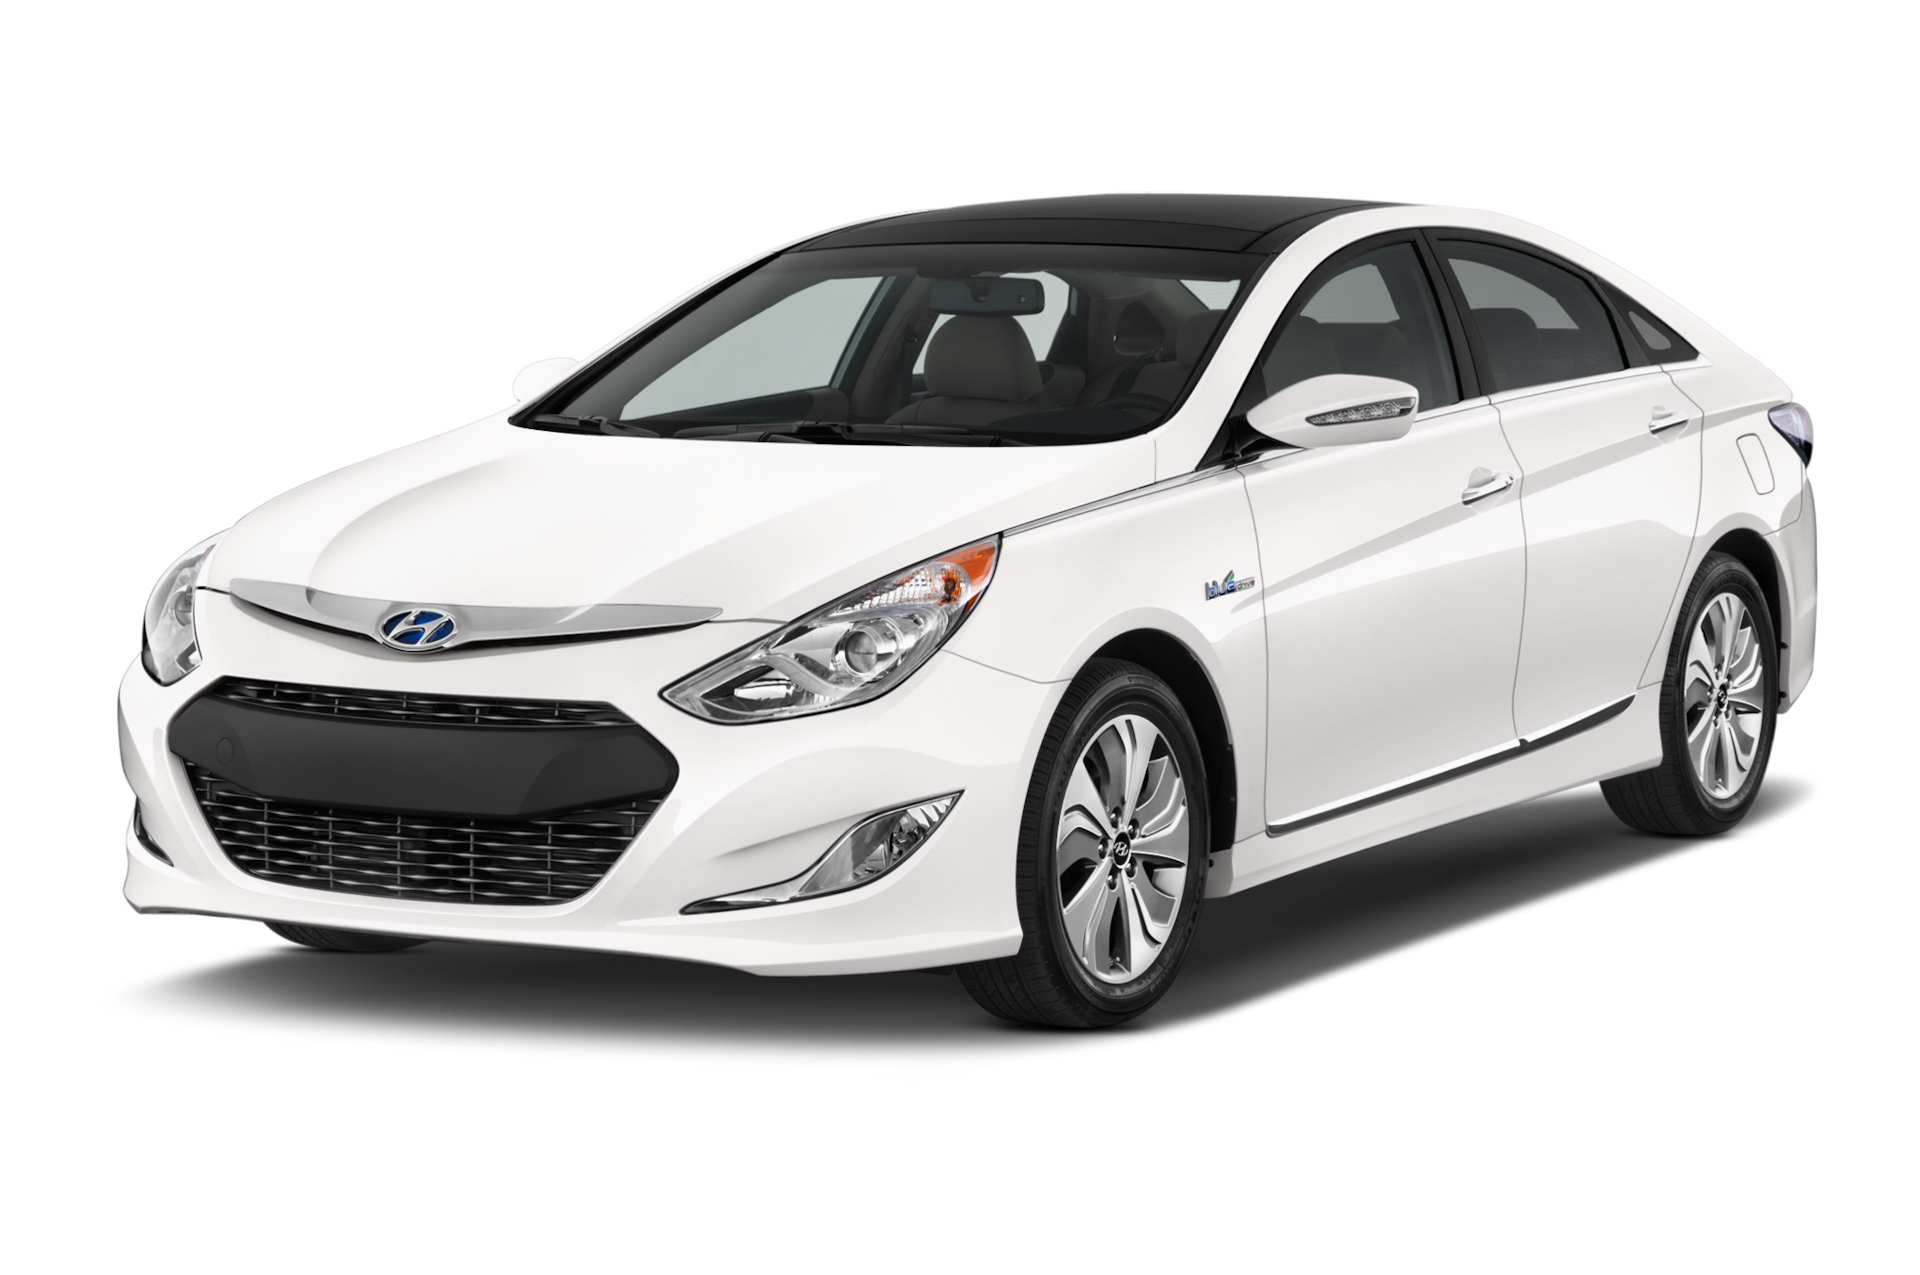 2015 Hyundai Sonata Hybrid Prices, Reviews, and Photos - MotorTrend